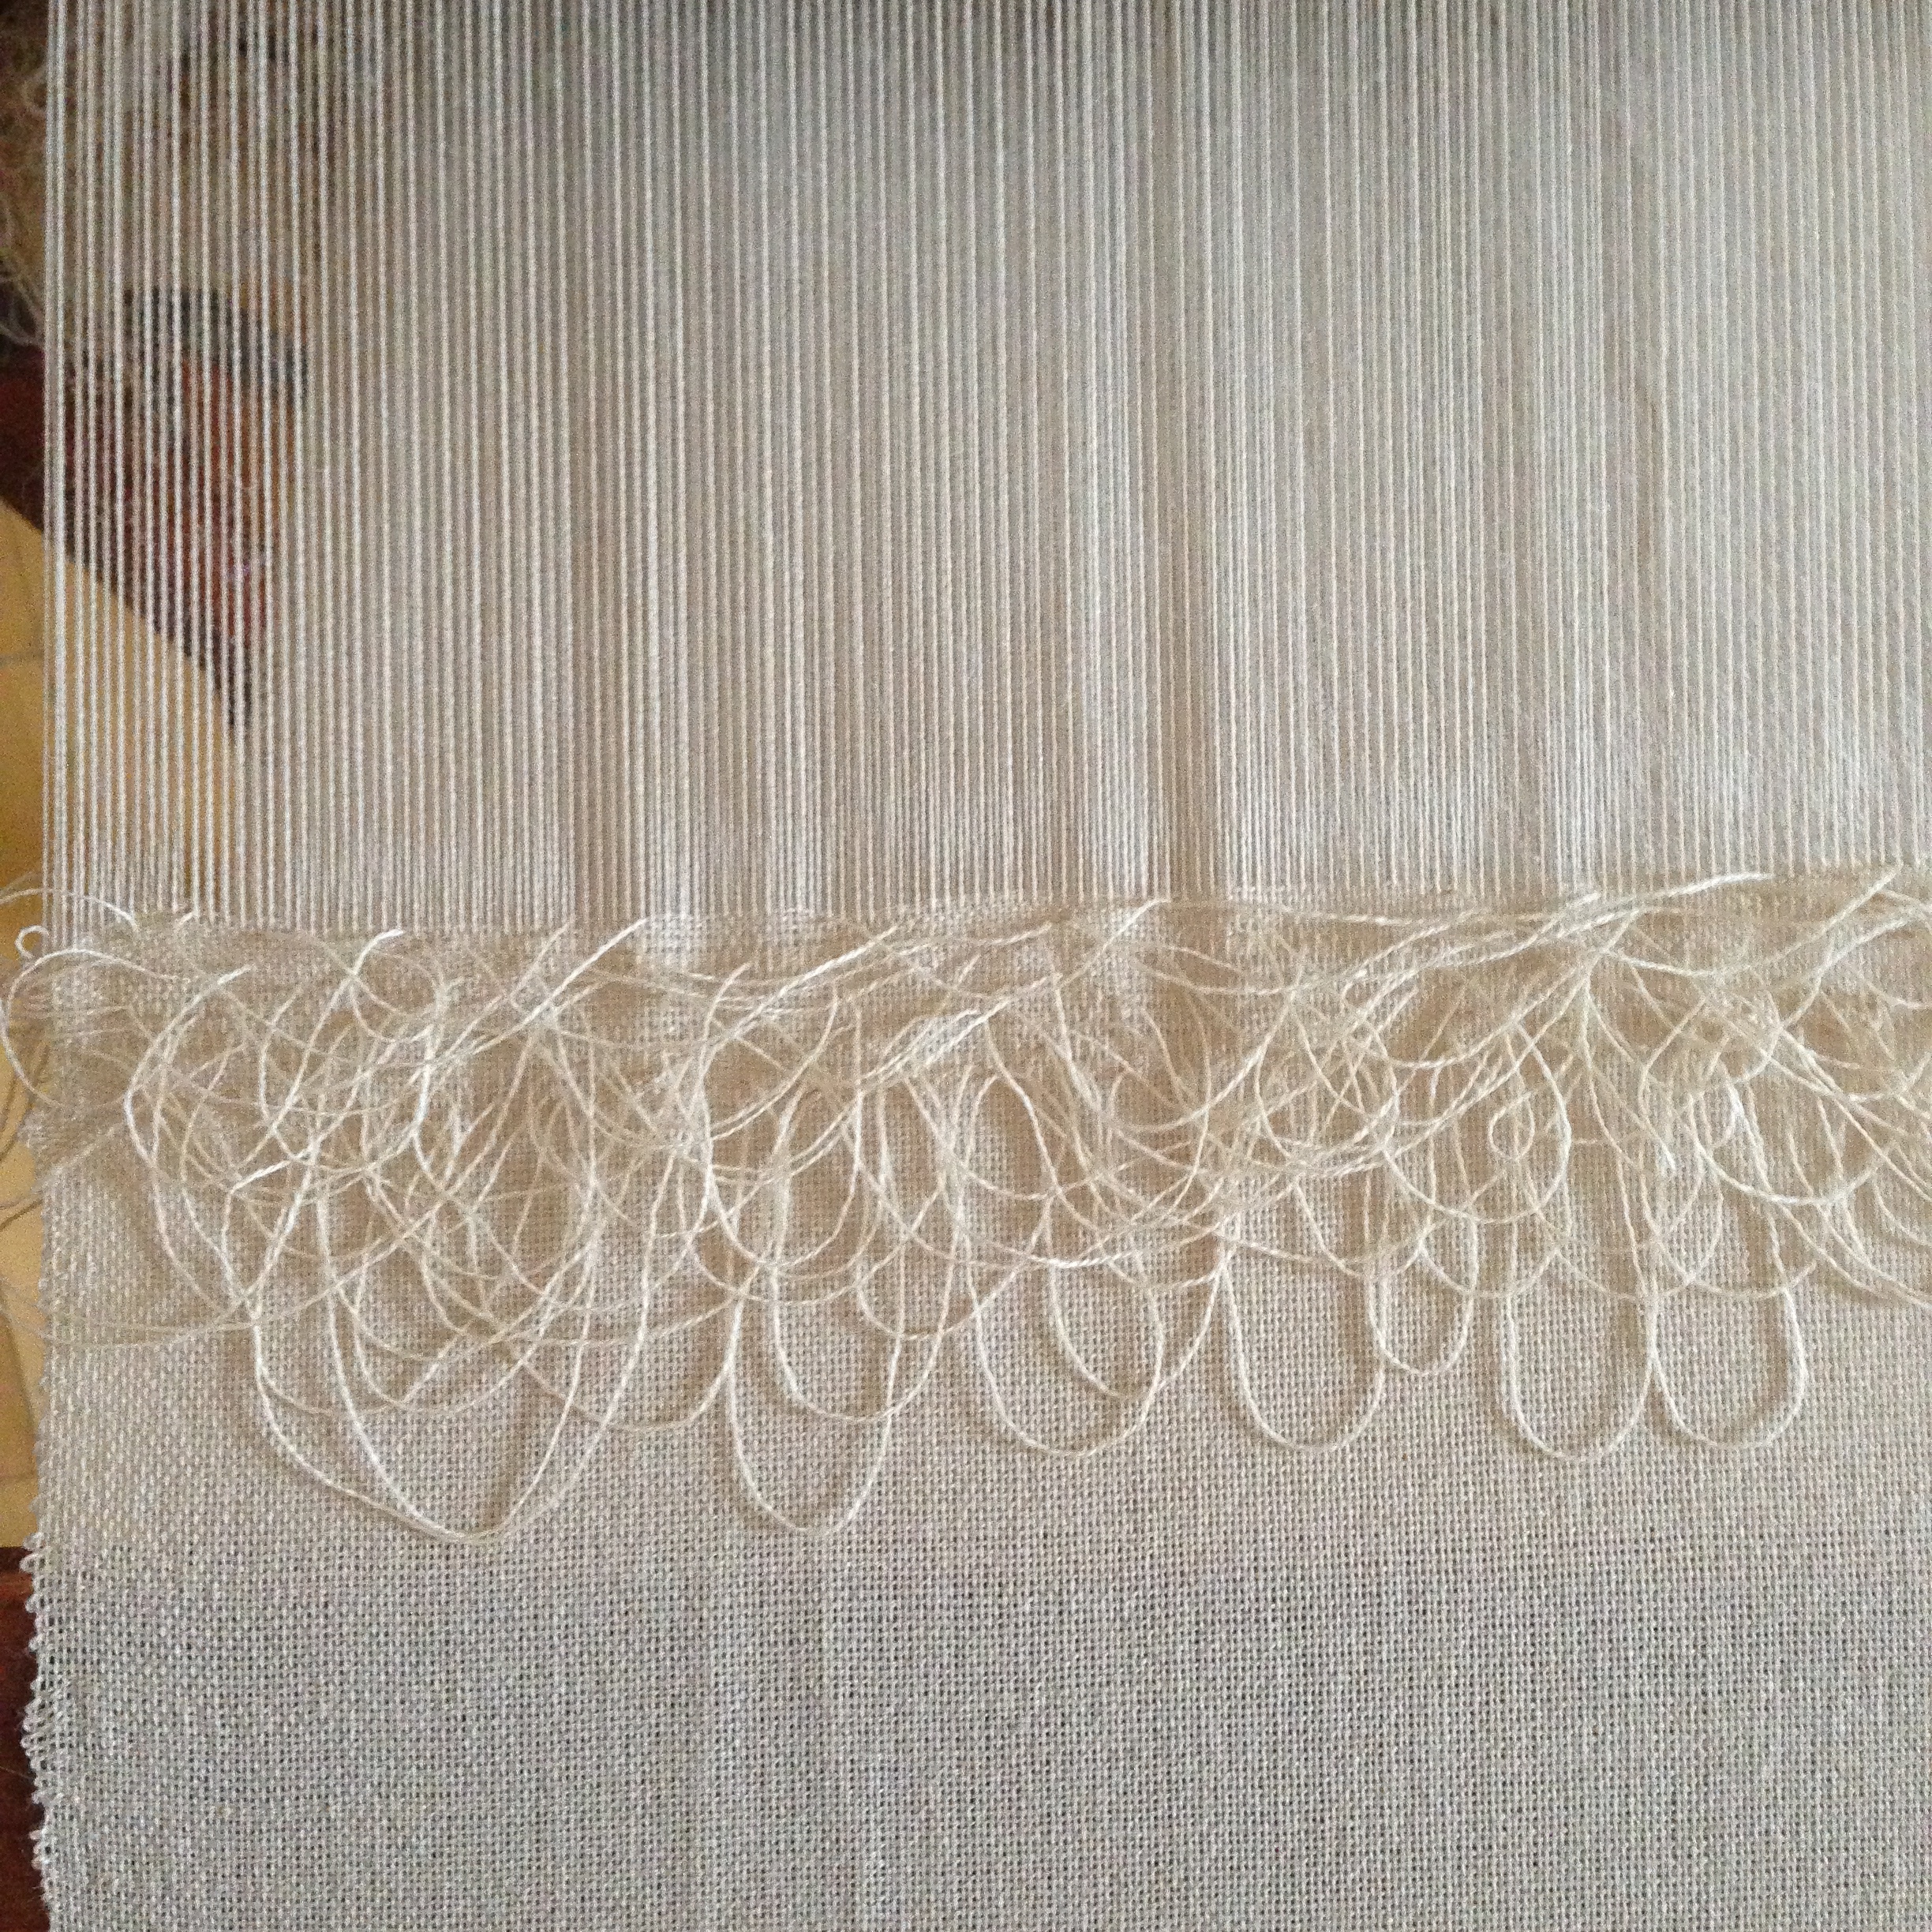  Loom Drawing, 2016  Handwoven merino wool 